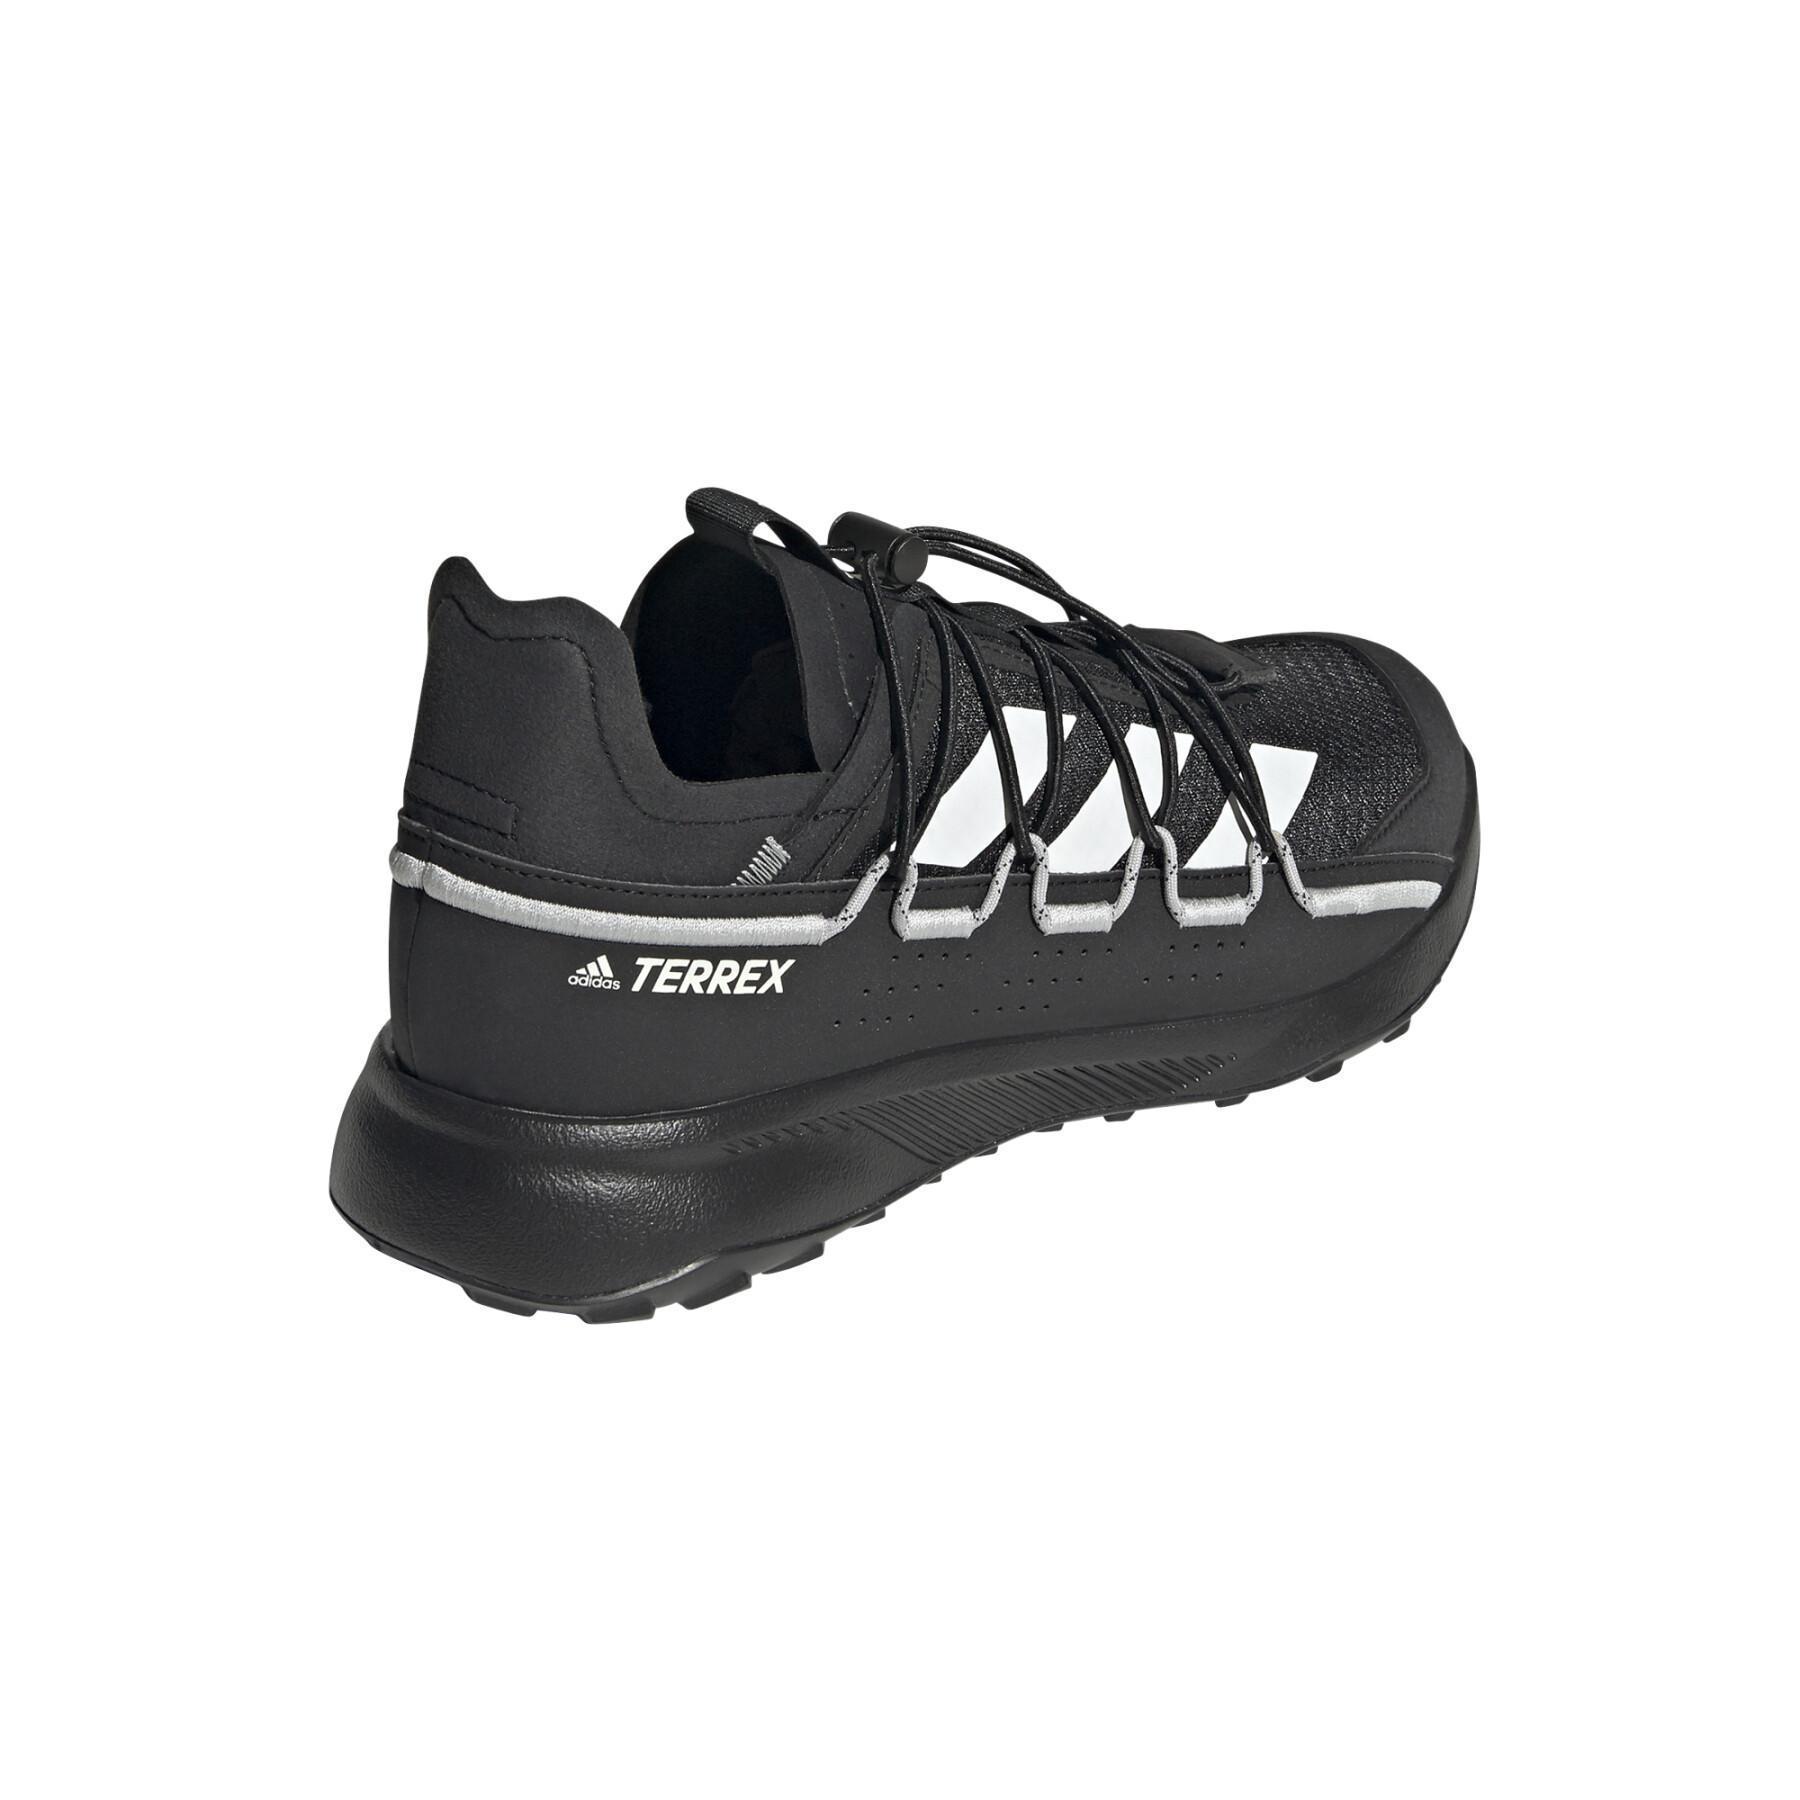 Sapatos para caminhadas adidas Terrex Voyager 21